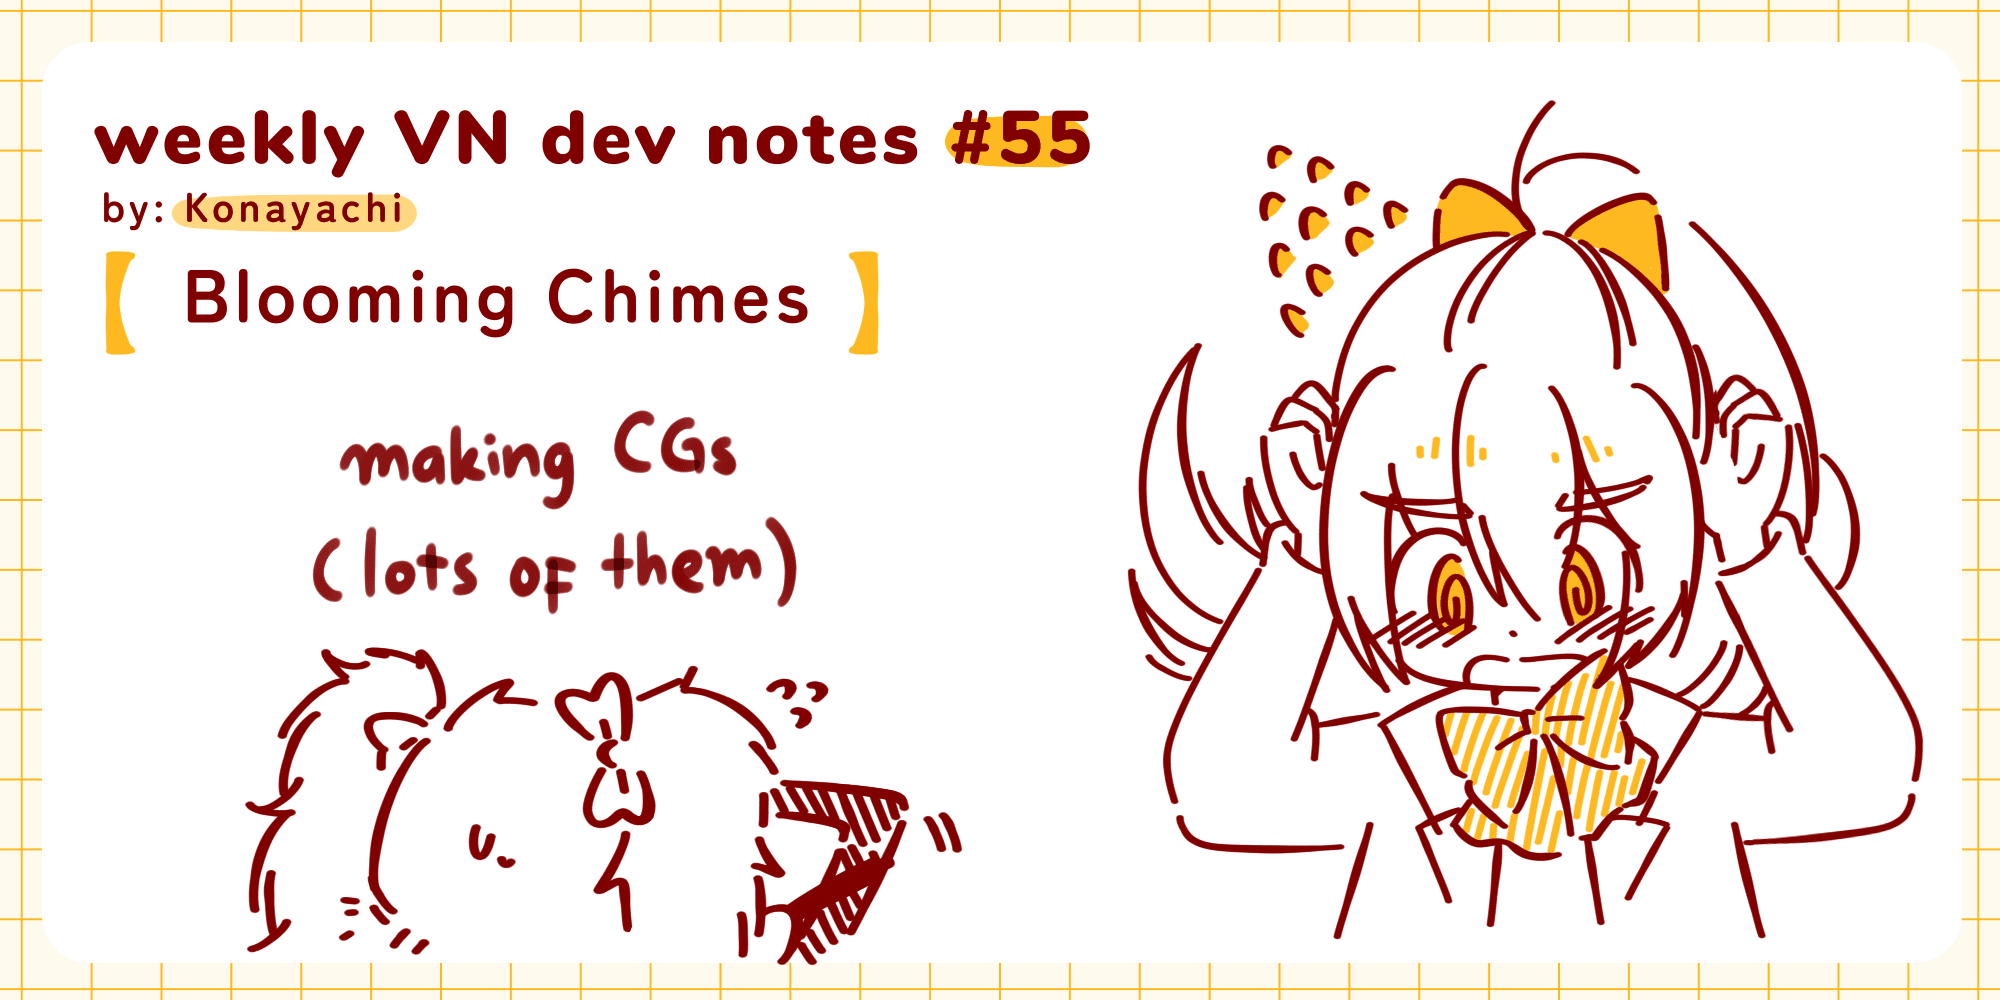 Weekly Dev Notes 55 / Blooming Chimes